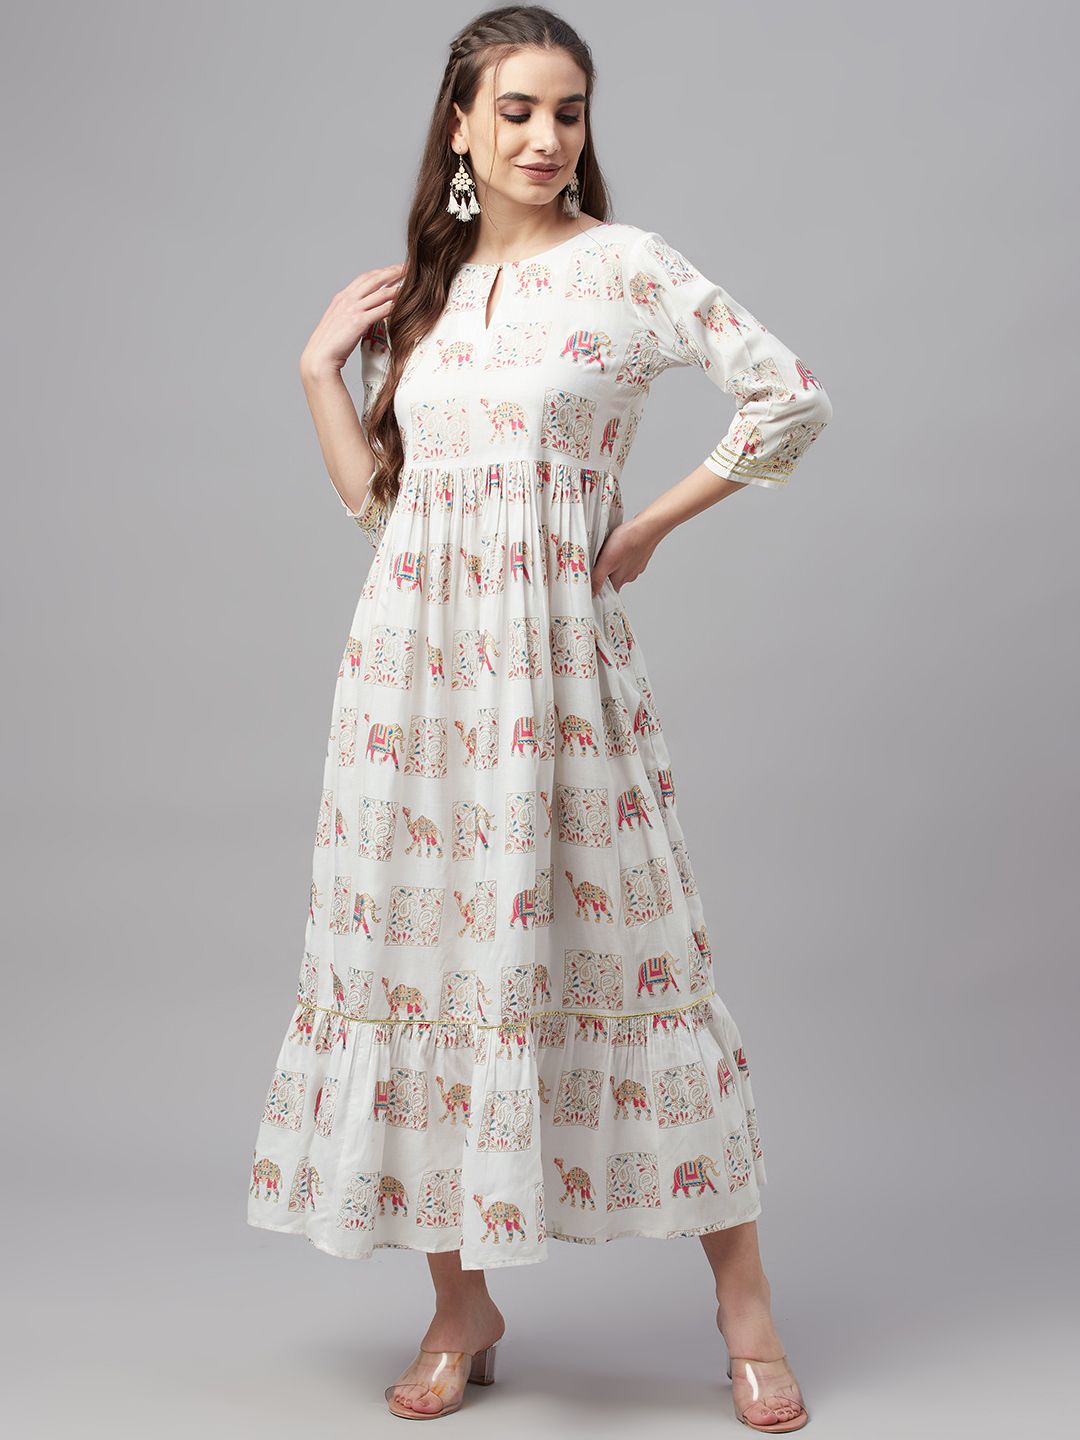 MBE White Ethnic Motifs Ethnic Cotton Maxi Dress Price in India